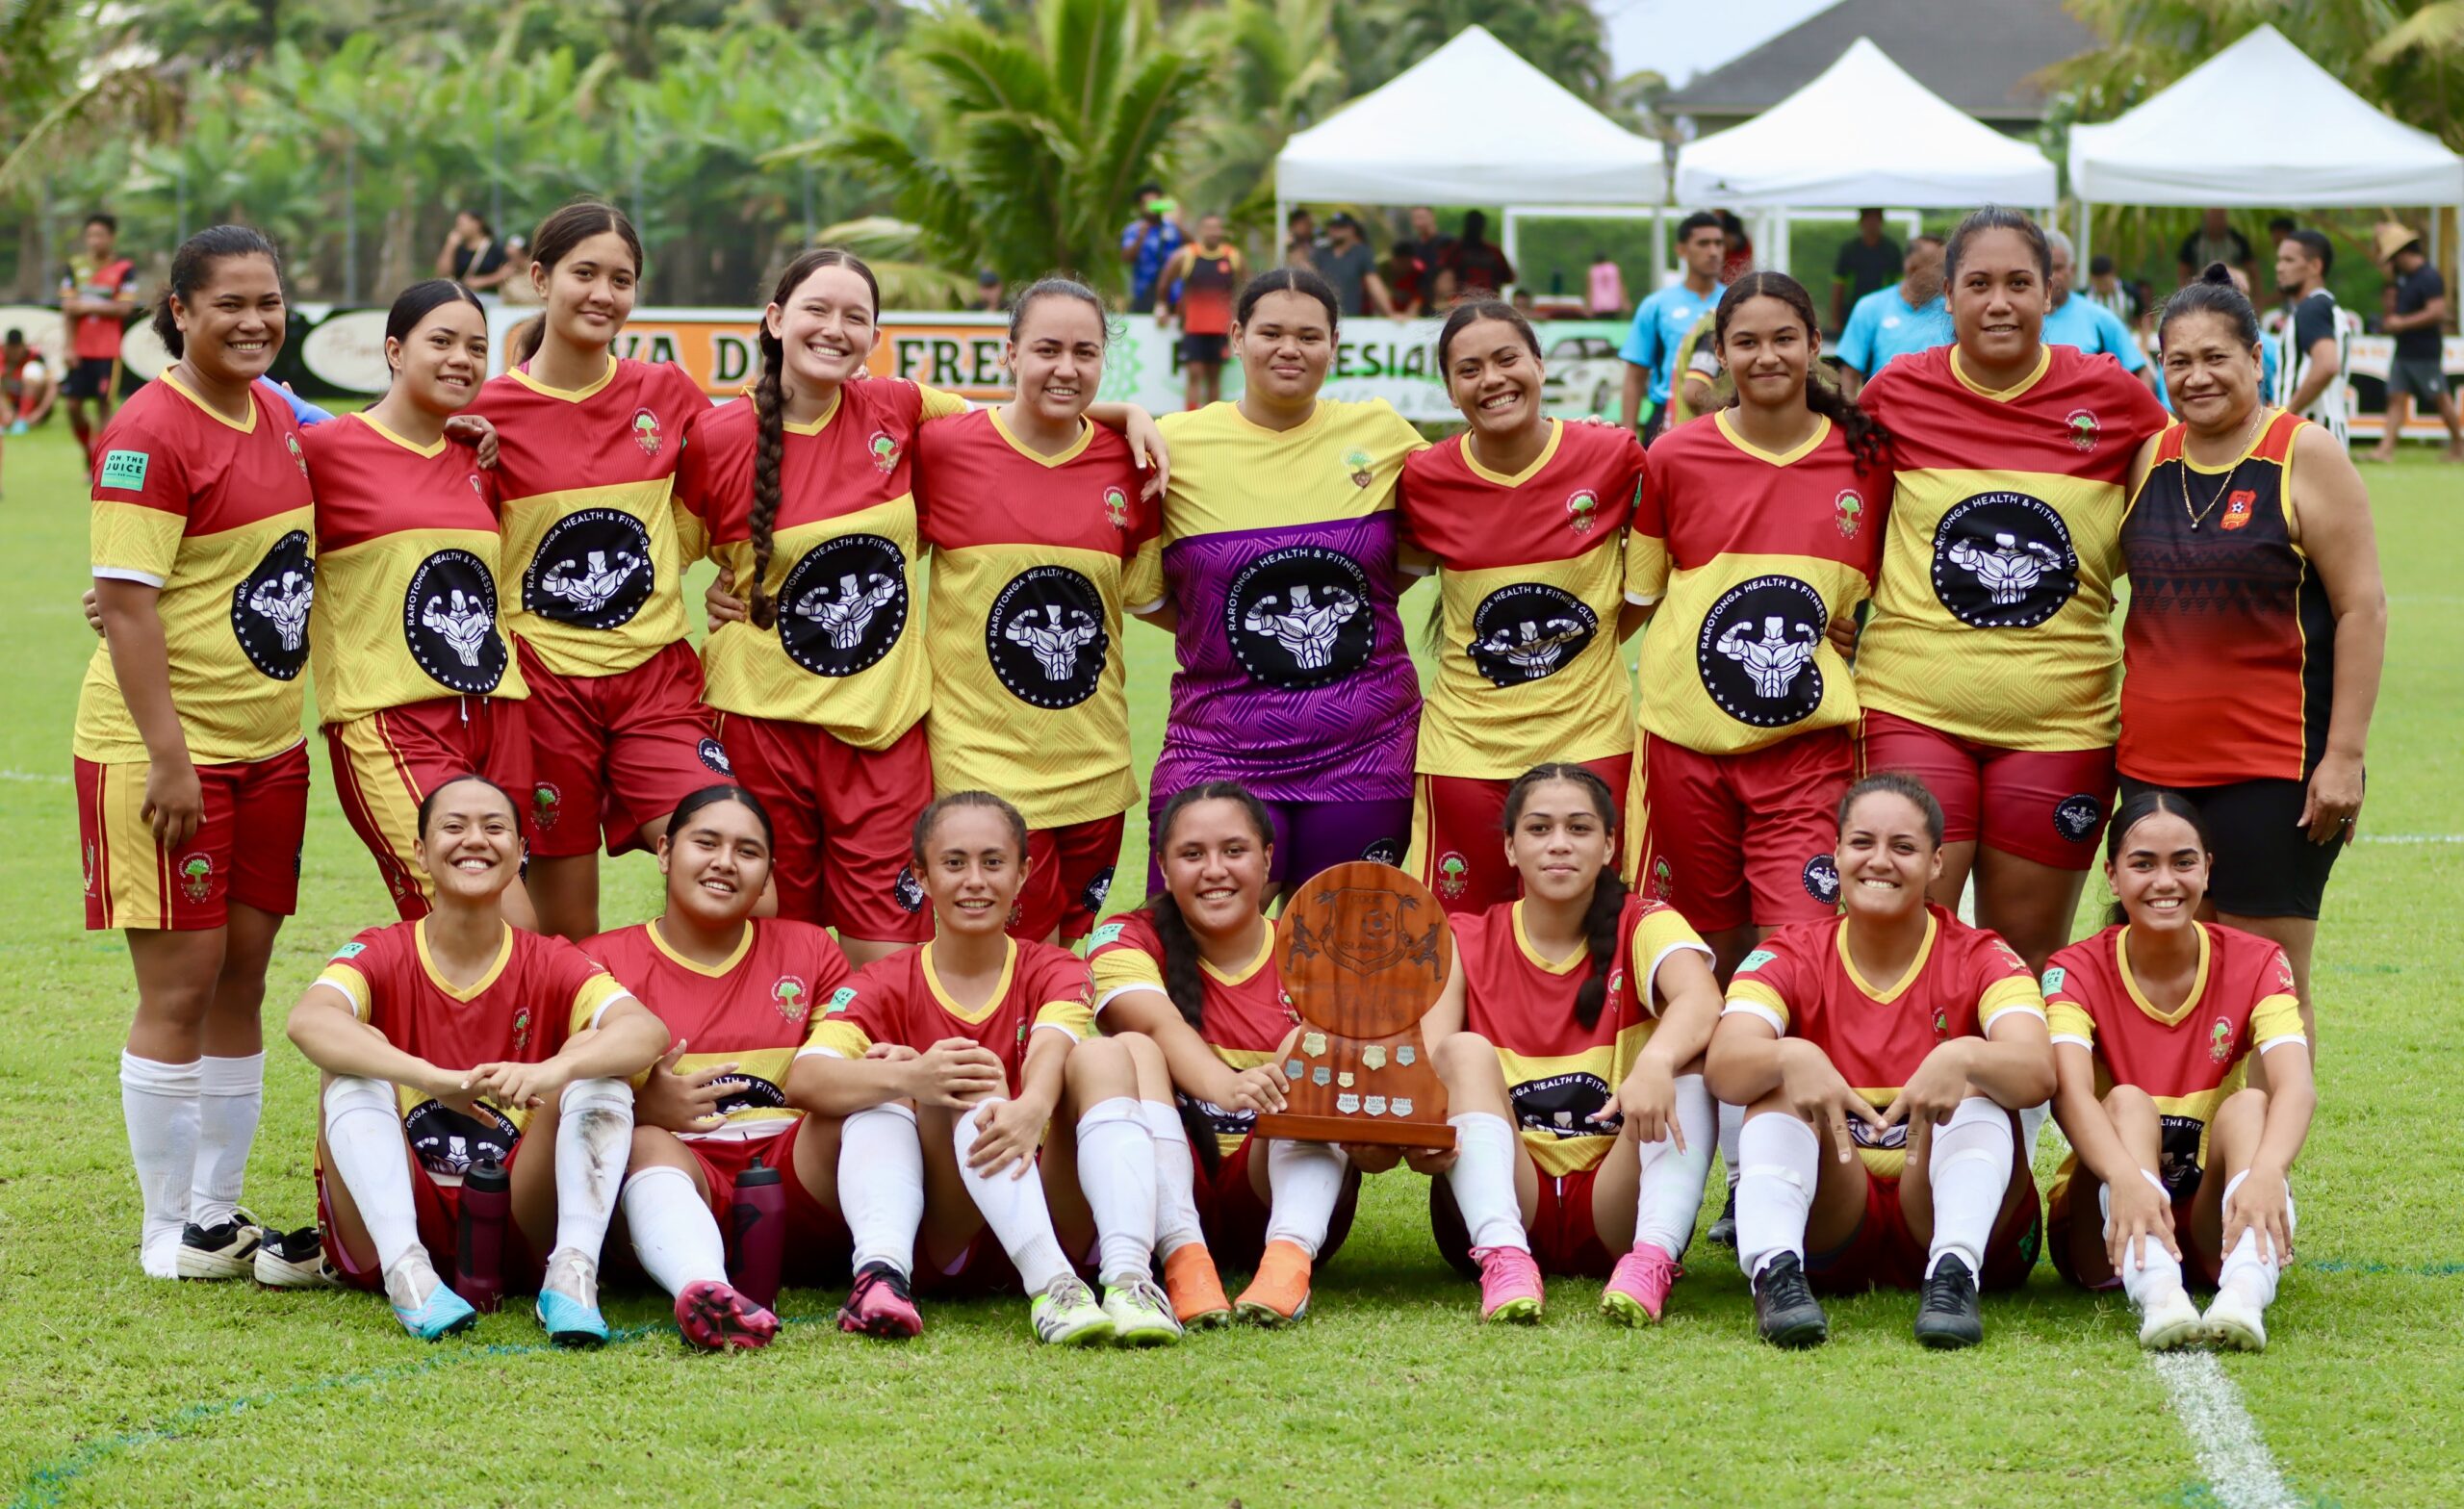 Matavera-Ngatangiia women blaze a trail in Cook Islands Football